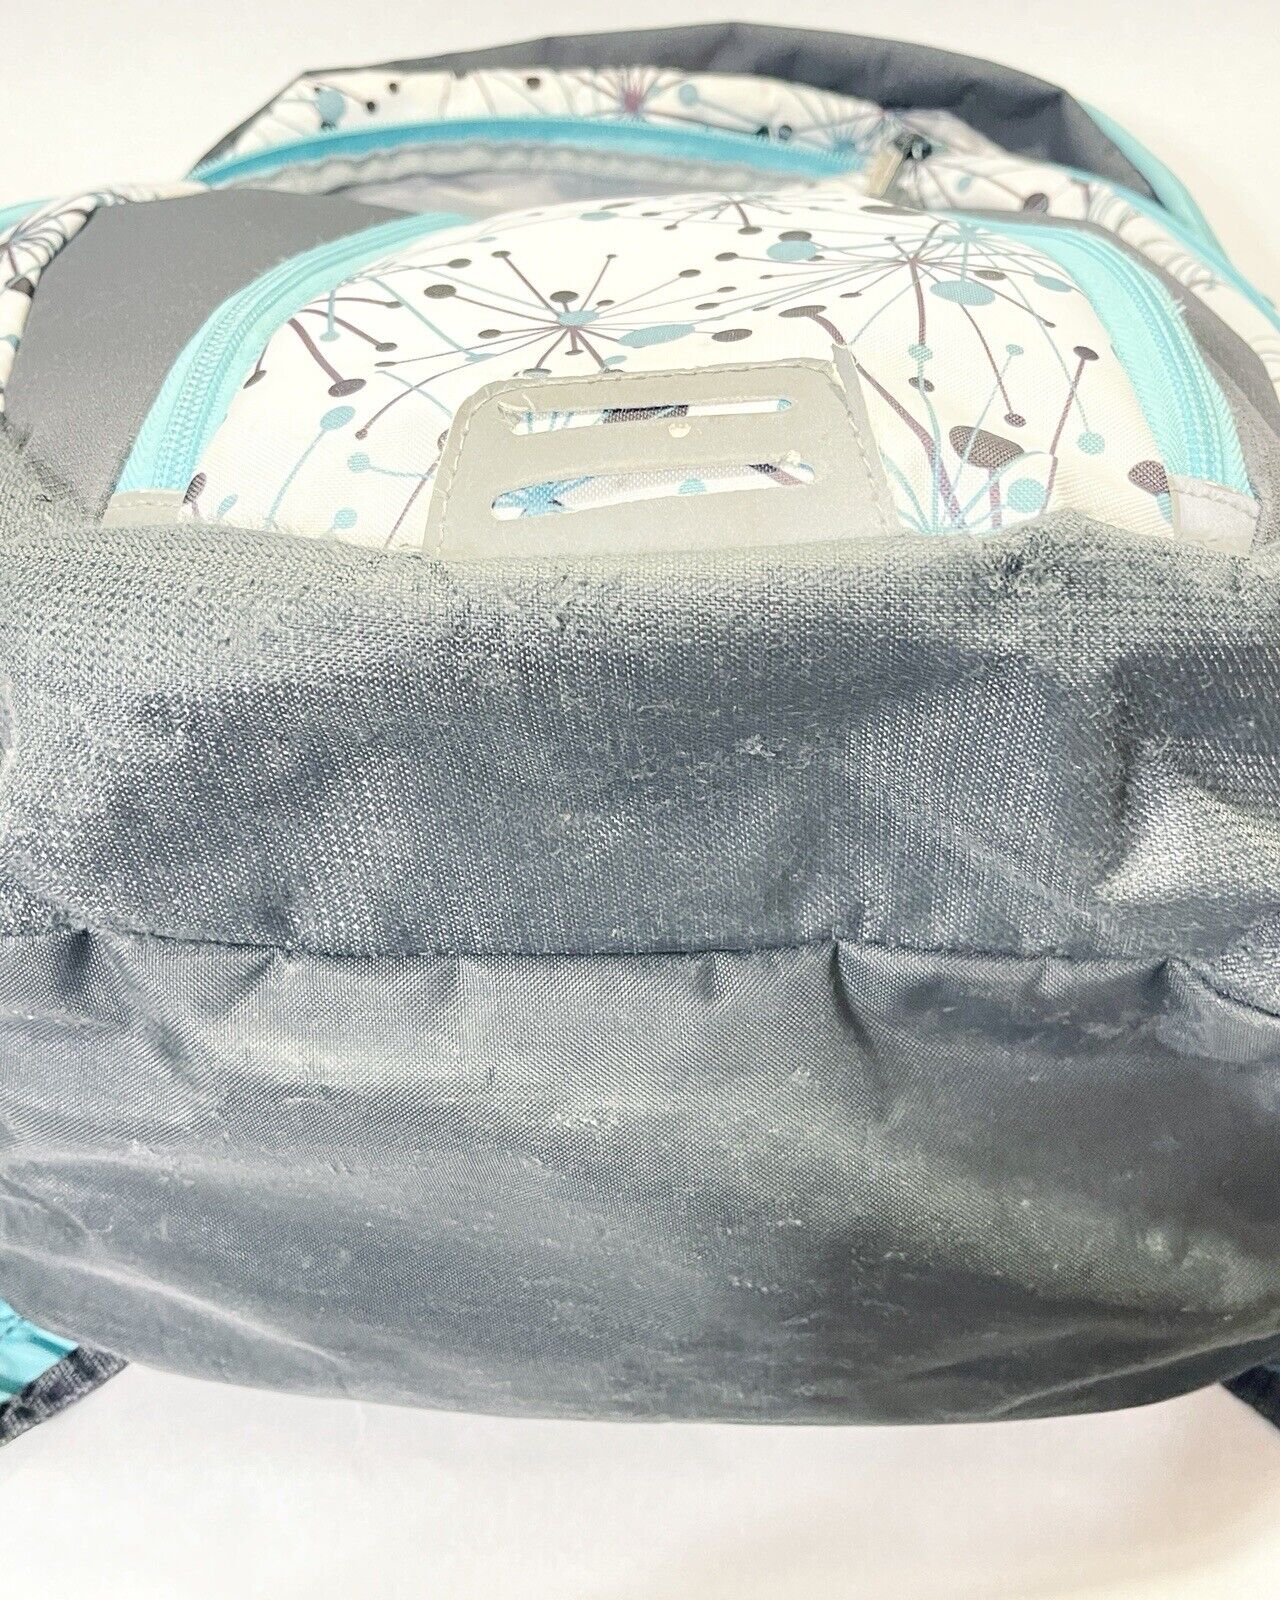 Eastsport Girls Backpack Large Novelty Print Teal White Gray Flaws